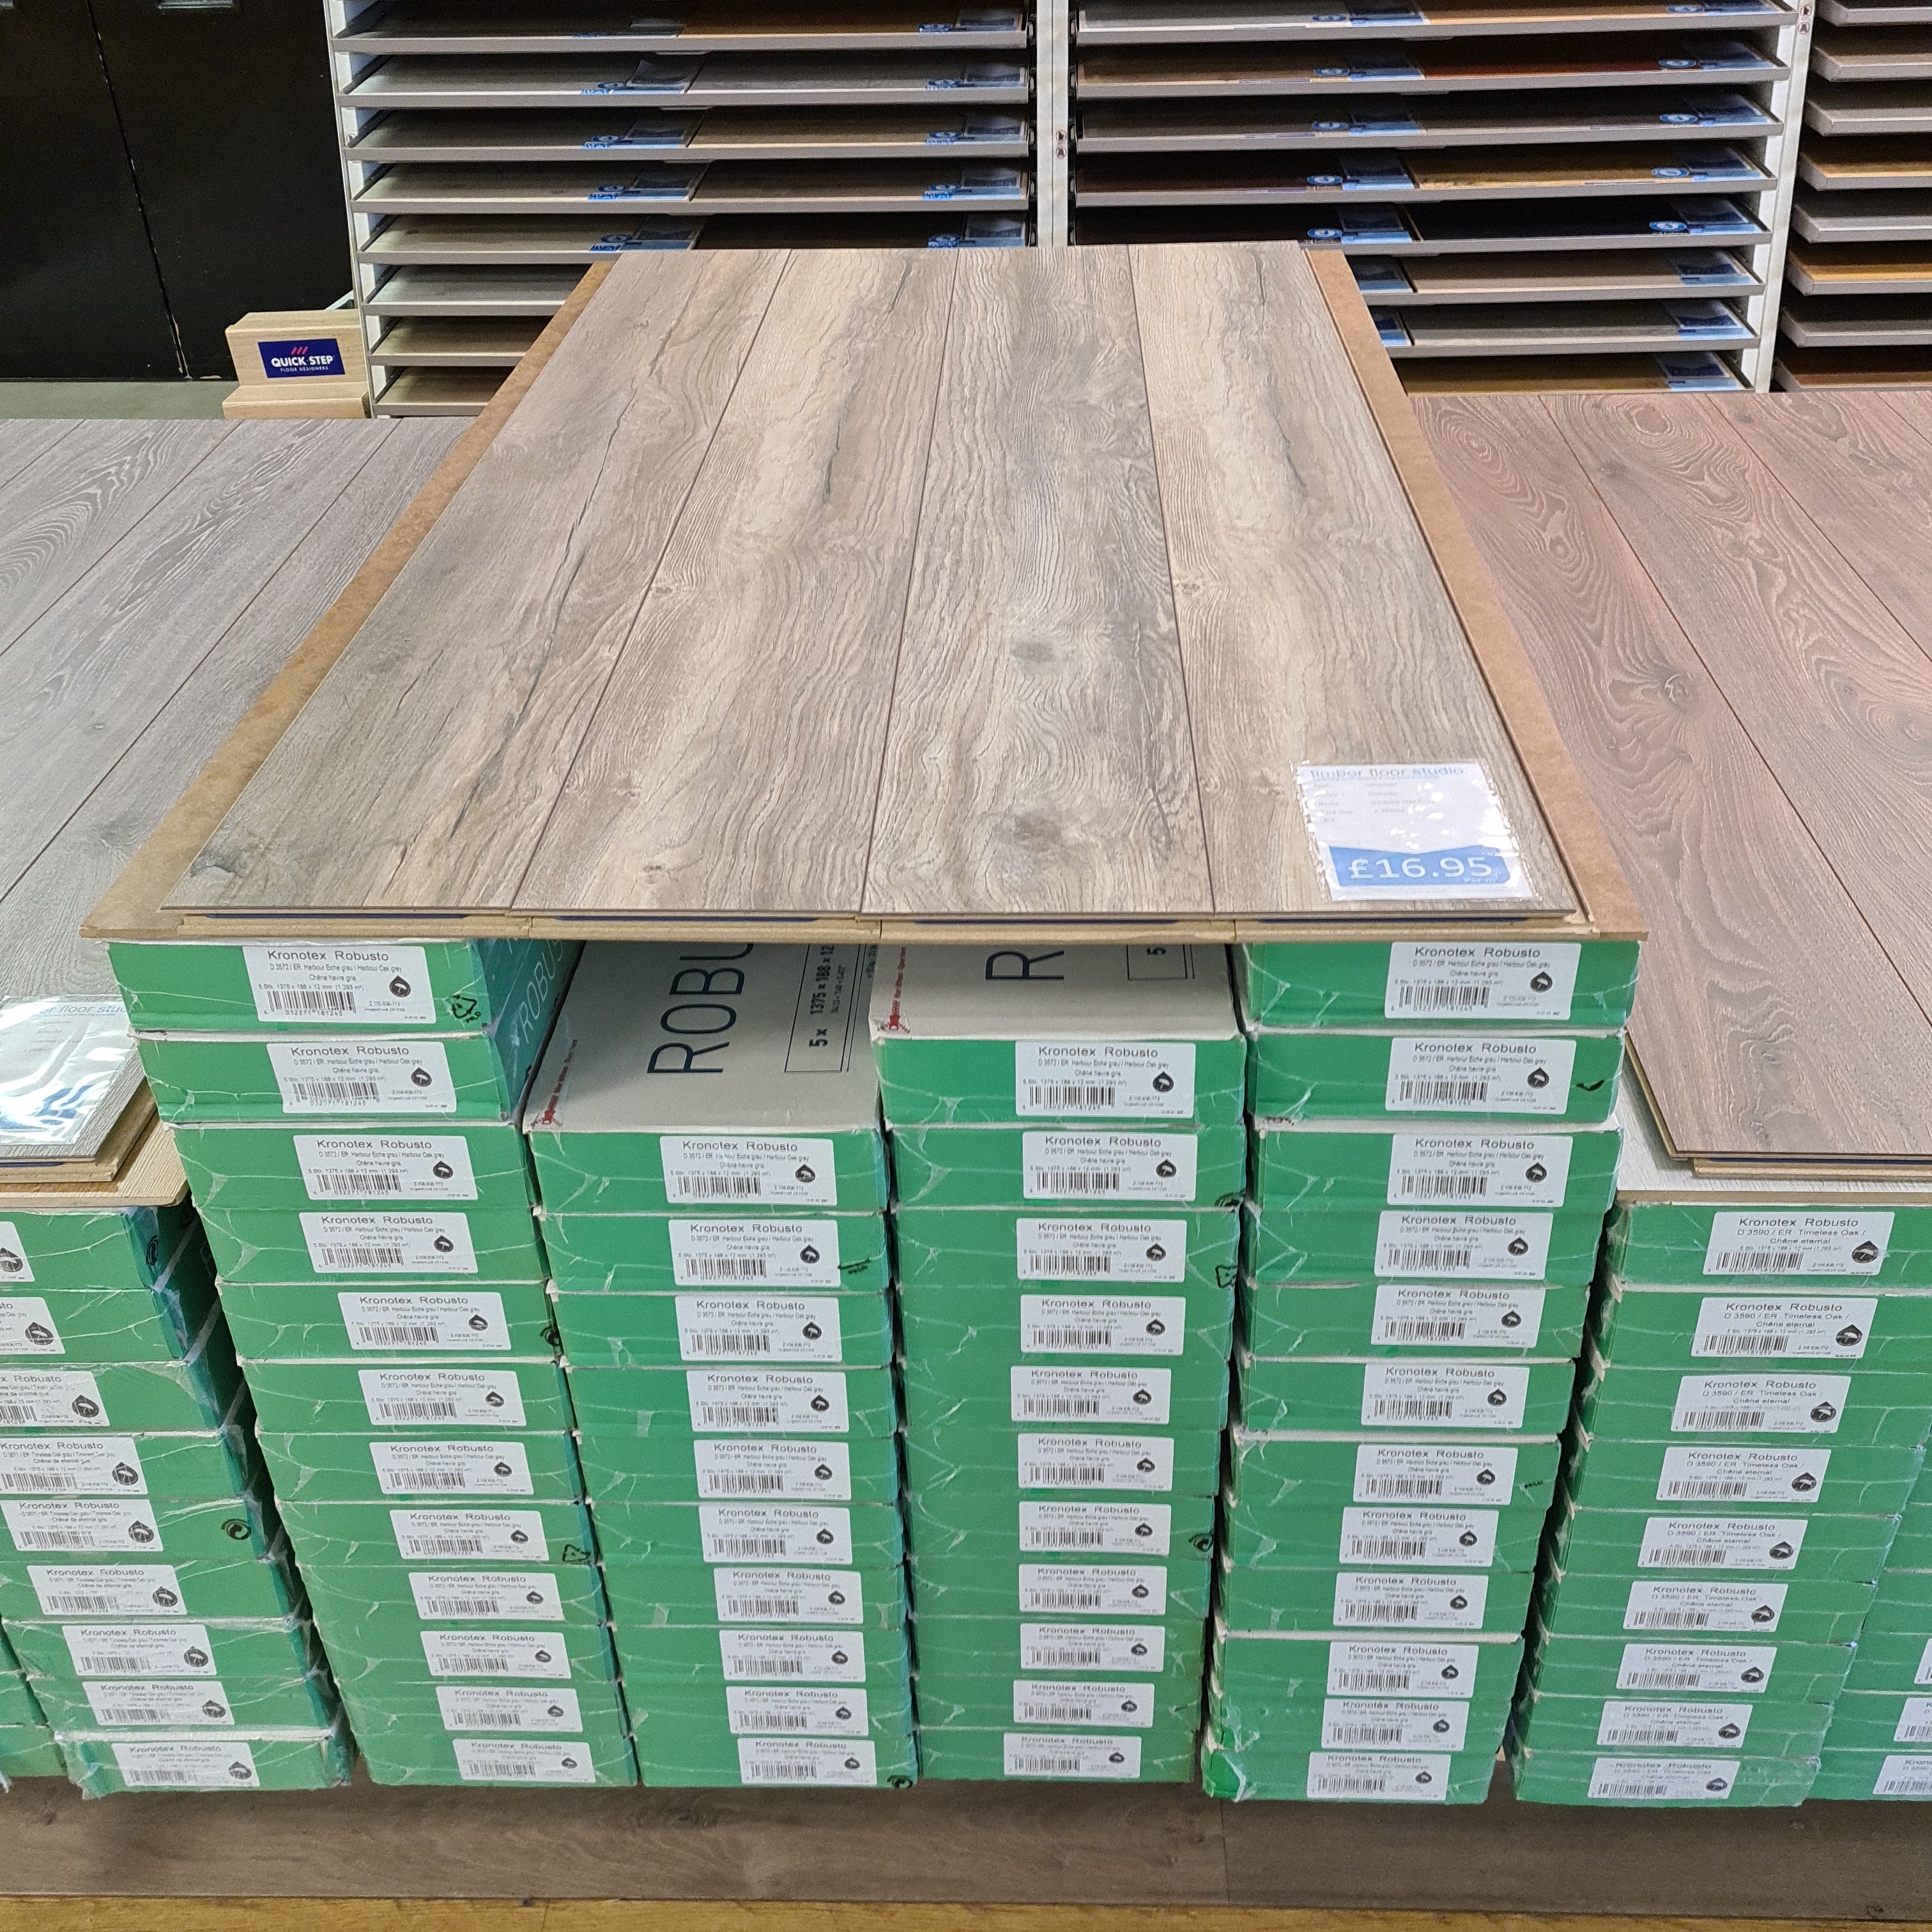 Kronotex Robusto Harbour Oak Grey Laminate Flooring  £16.95m2